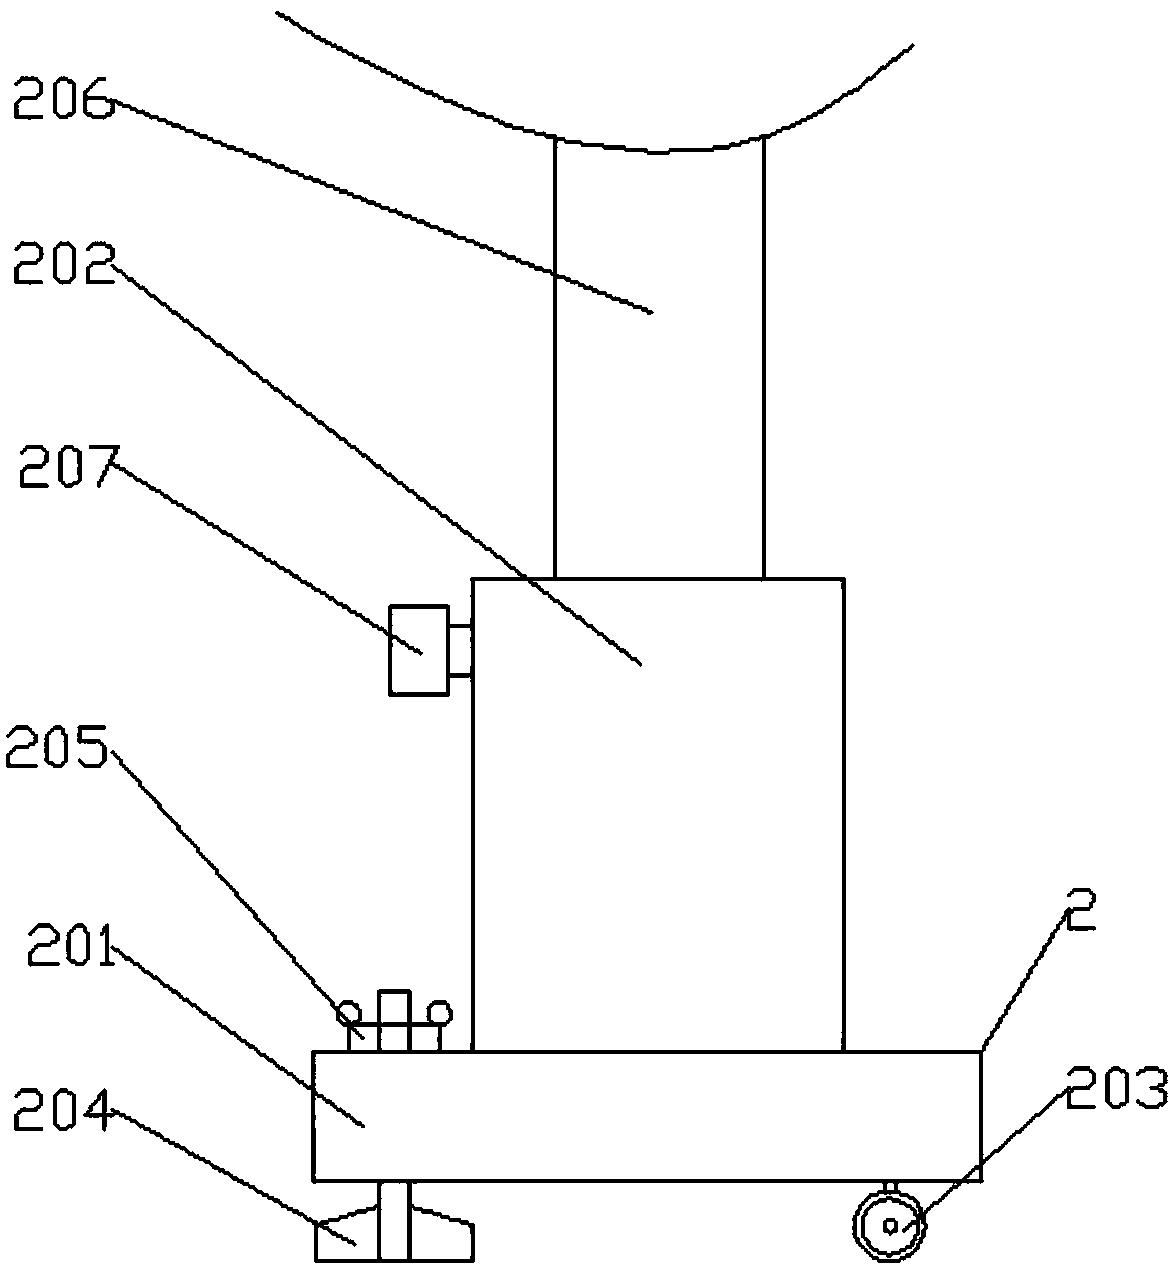 Yarn carding mechanism for providing yarns for prototype machine